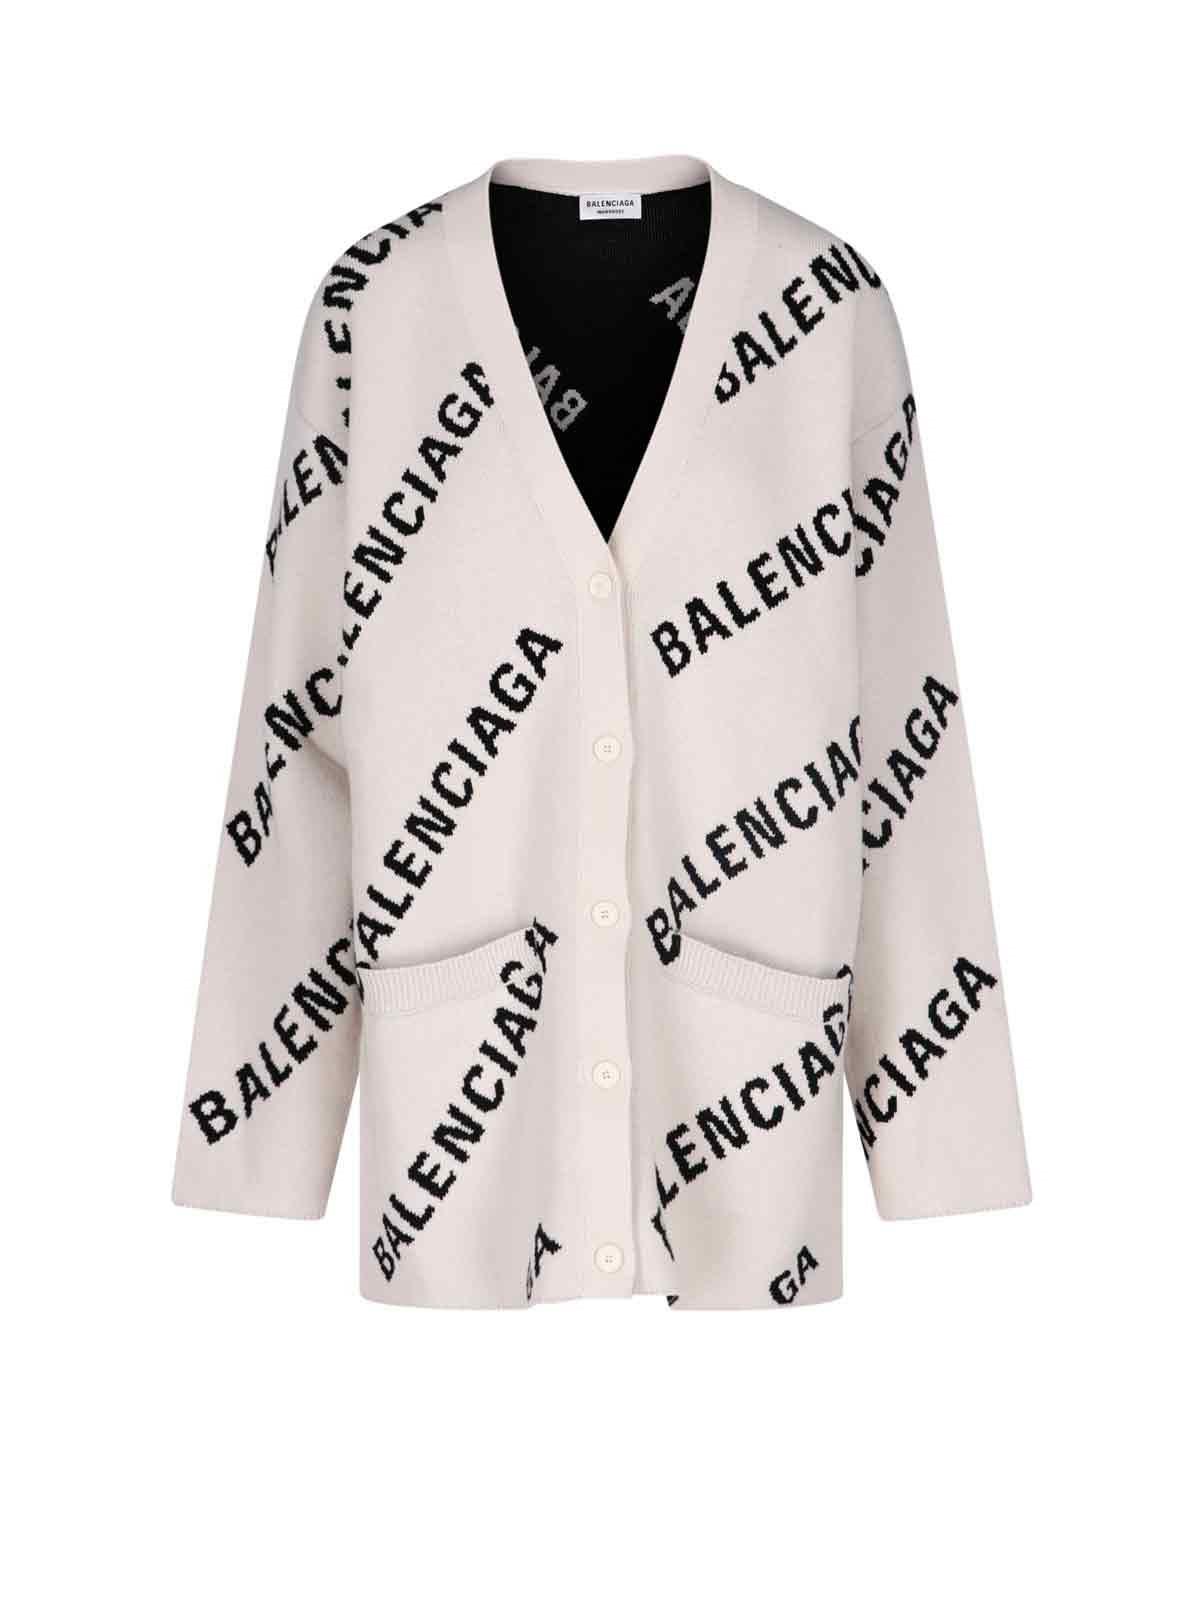 Balenciaga All-over Logo Cardigan in White | Lyst